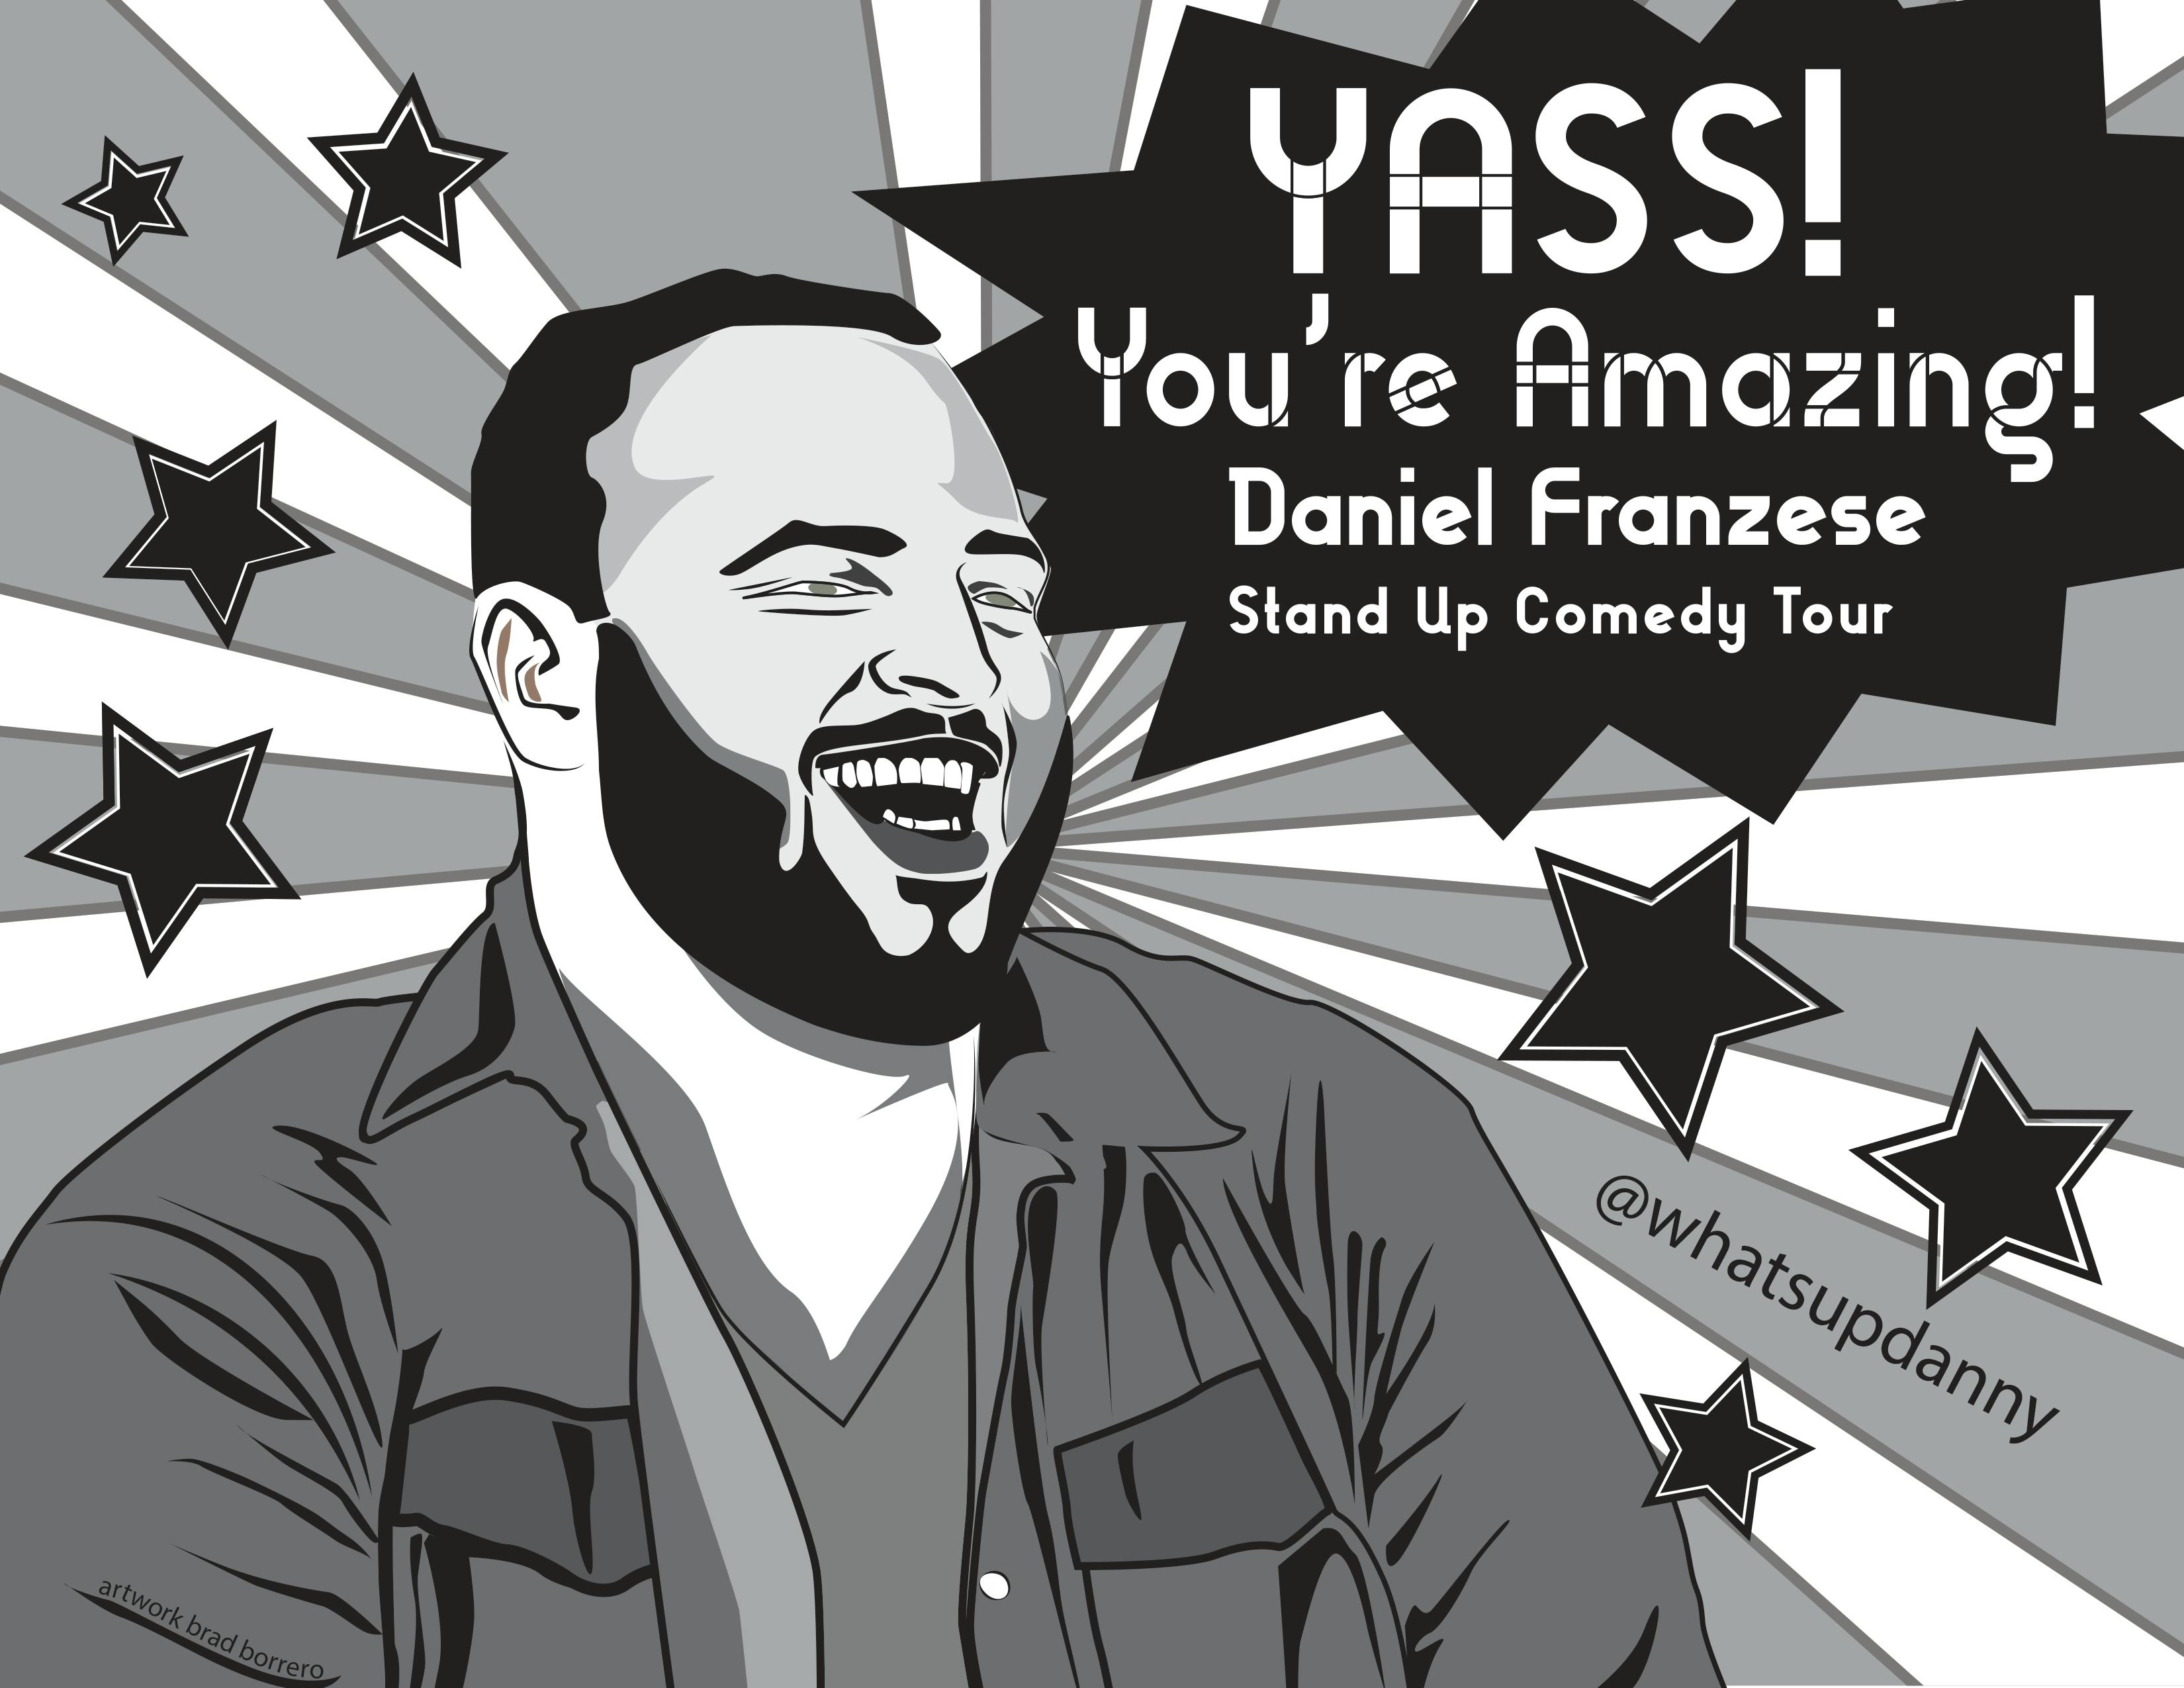 Daniel Franzese YASS Comedy Tour